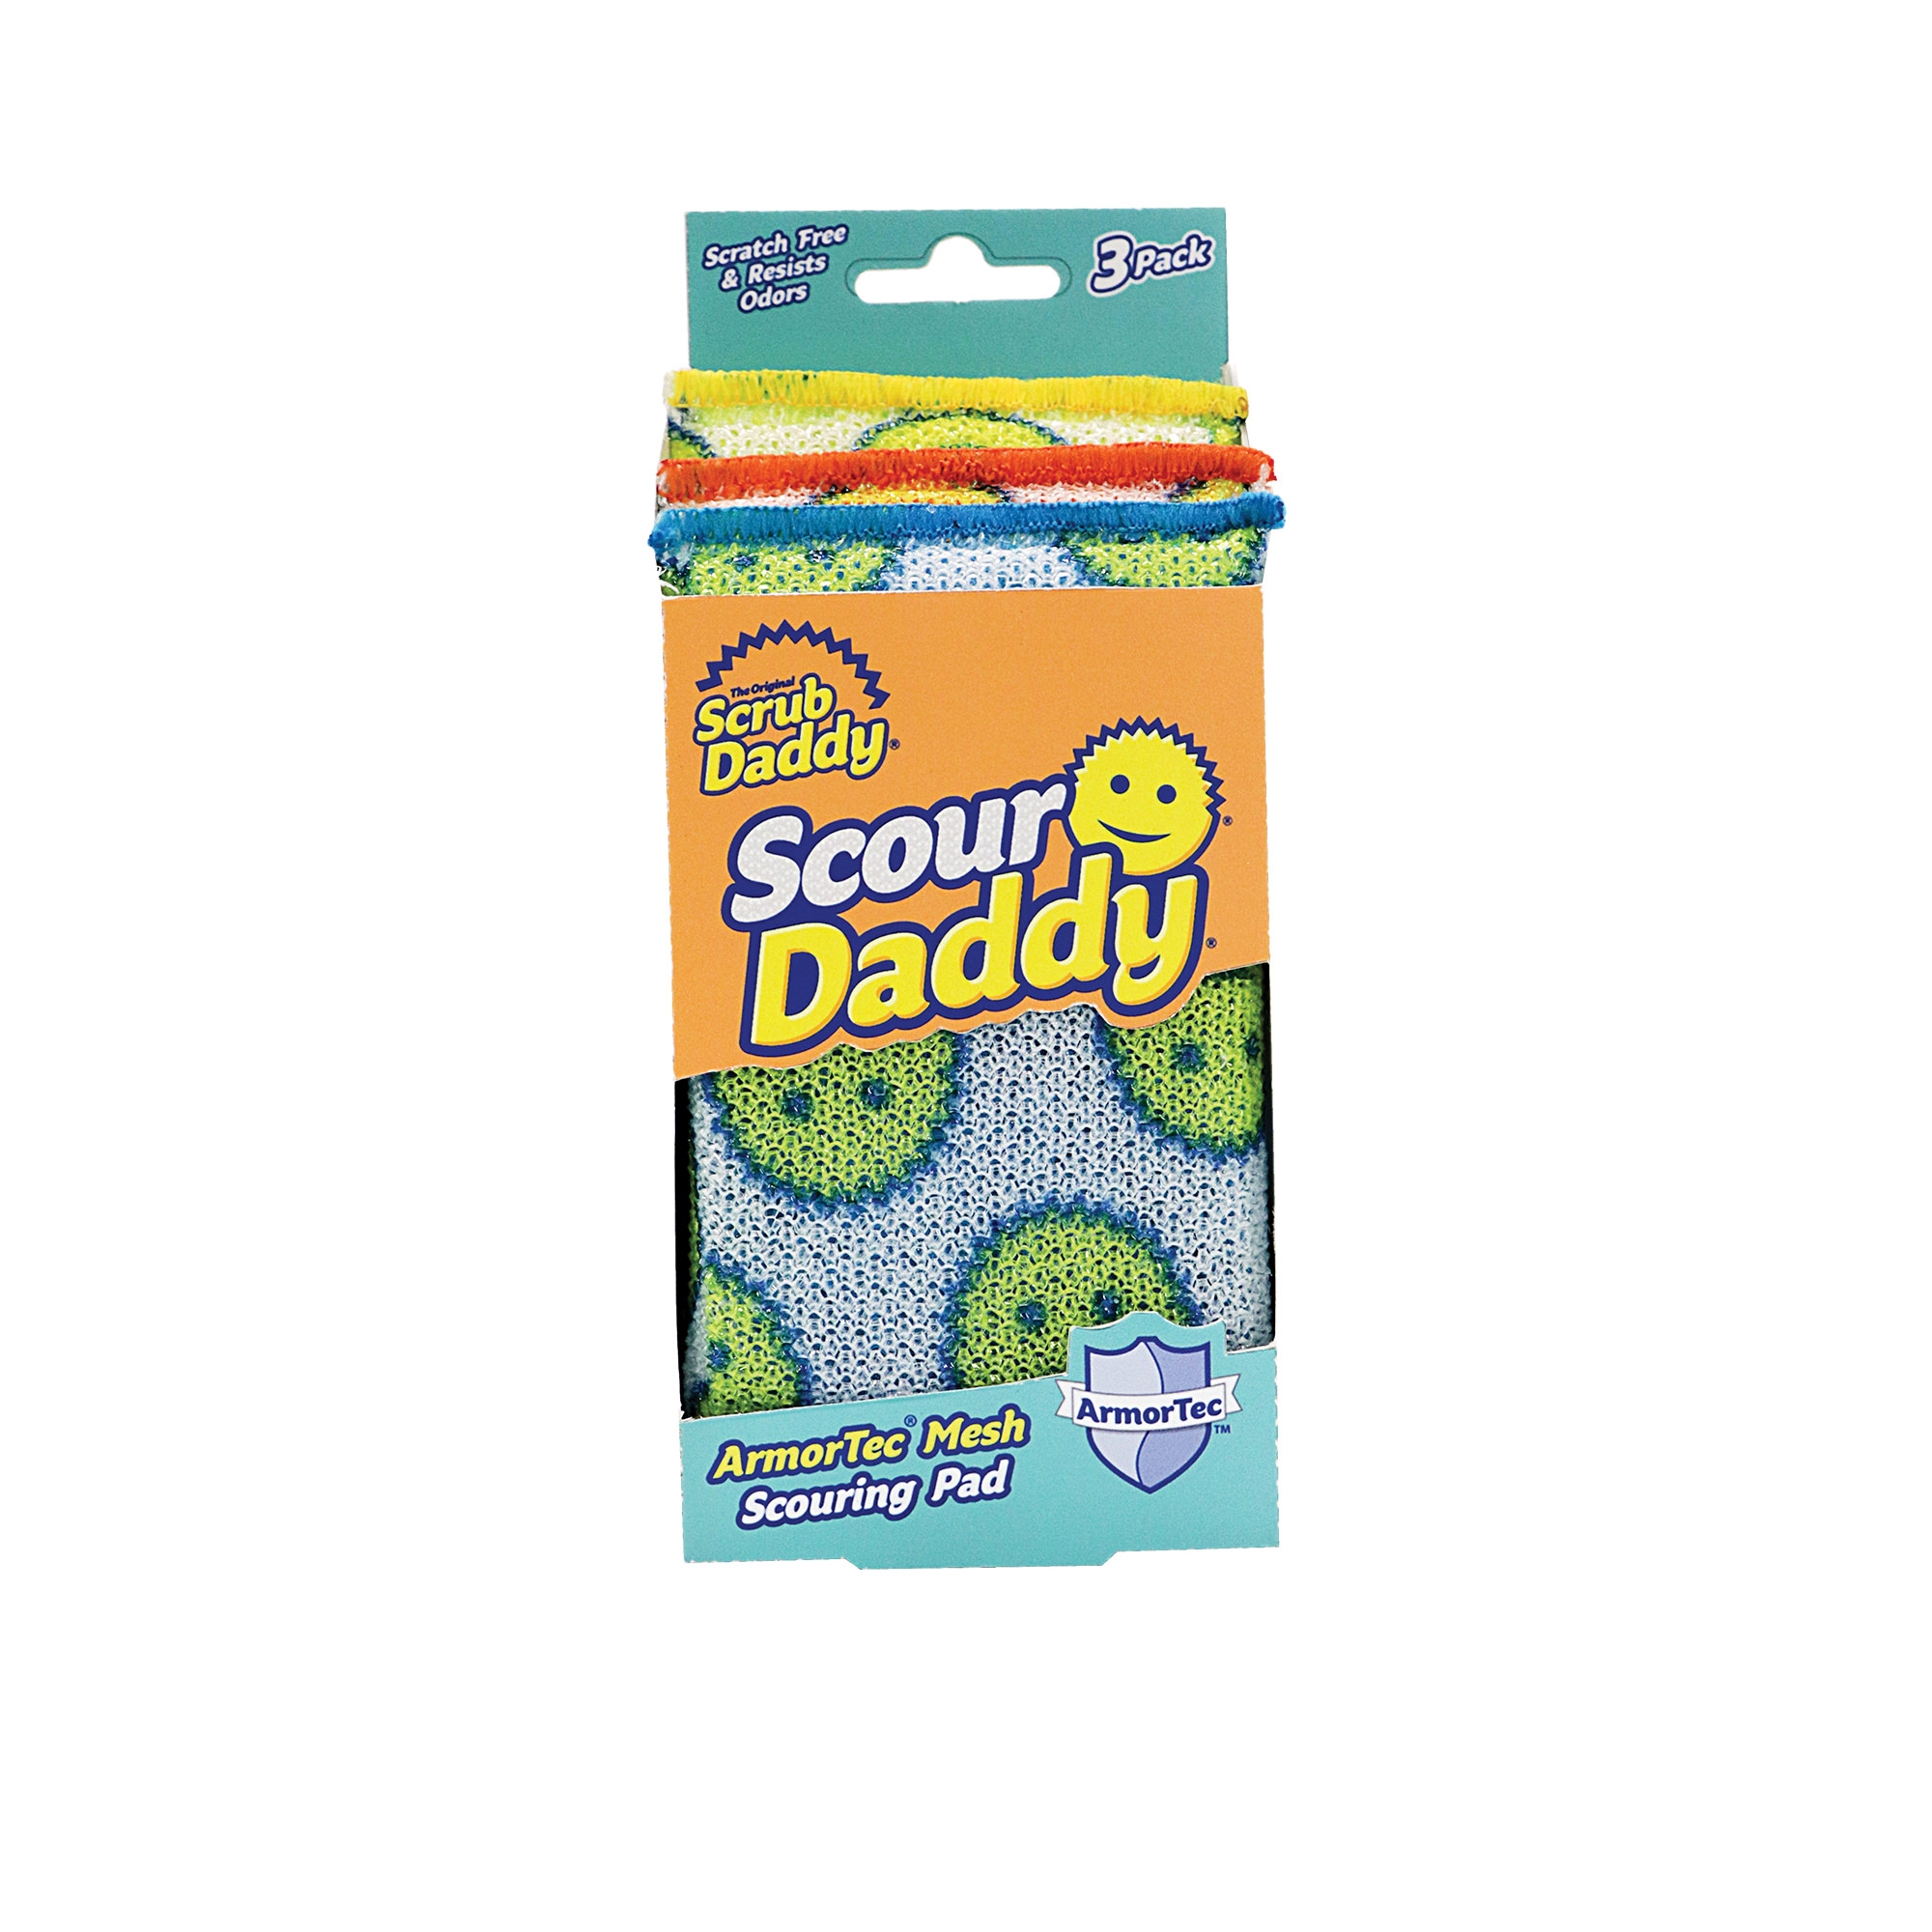 Scrub Daddy - Scour Daddy ArmorTec Mesh Scouring Pad 3pk Image 2